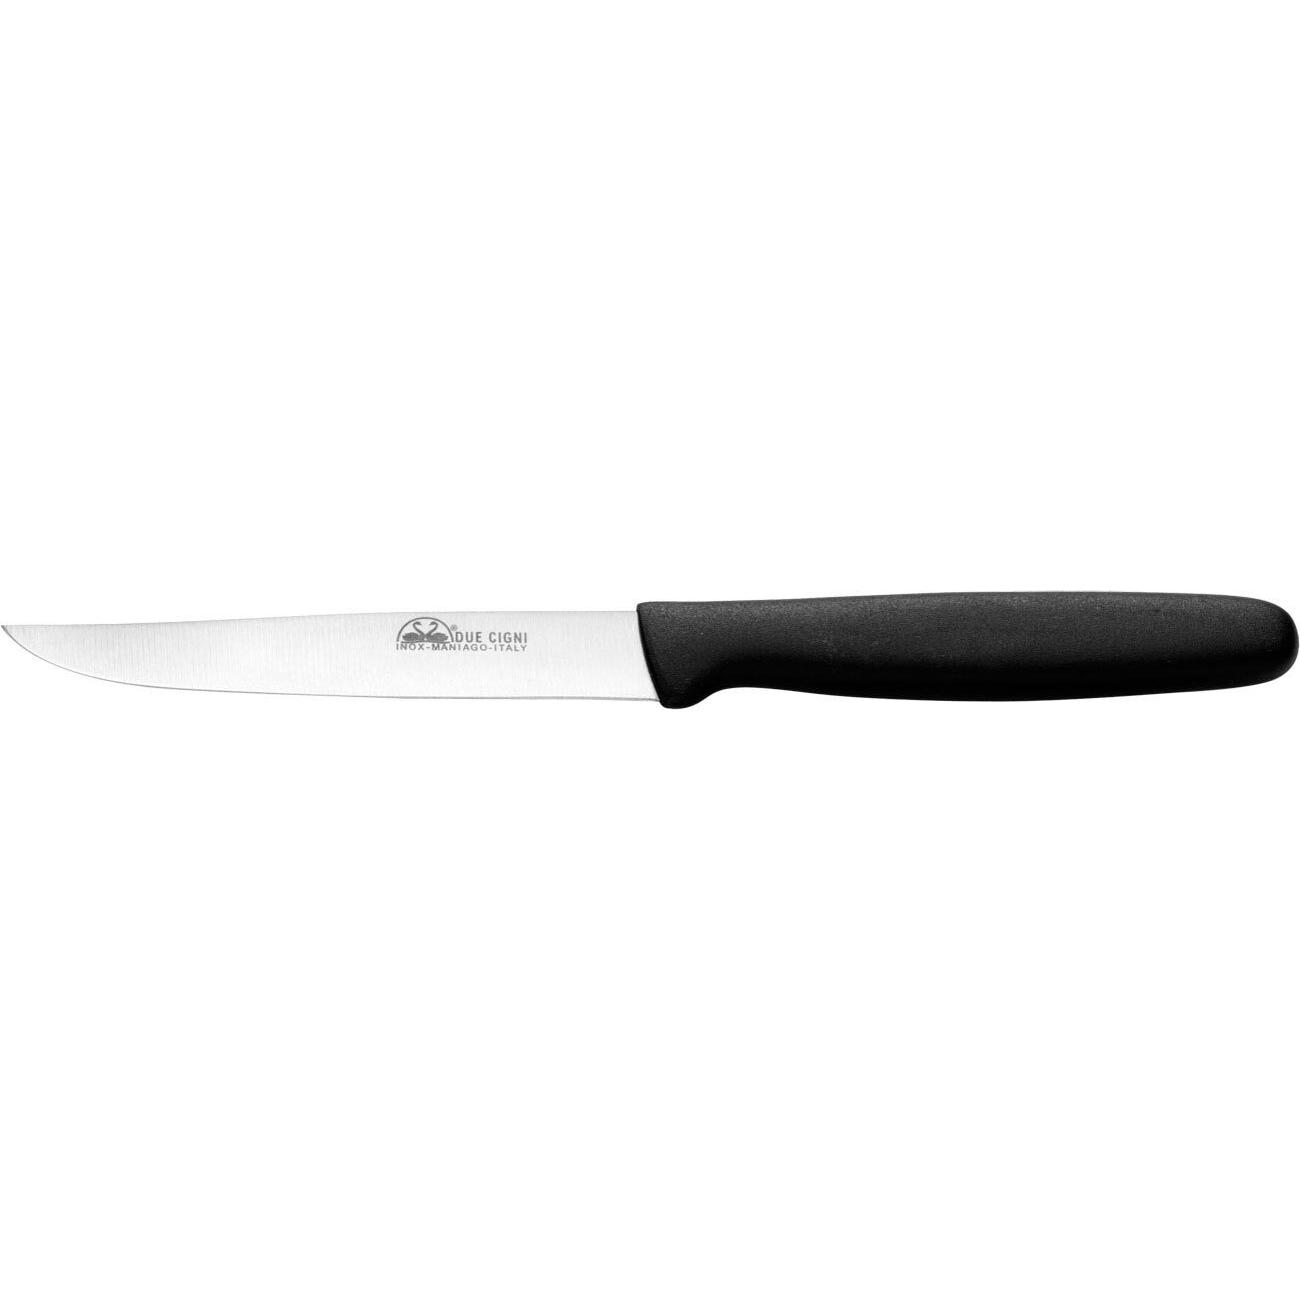 Нож кухонный Due Cigni Steak 110 мм. Цвет - черный 2C 713/11 1904.00.71